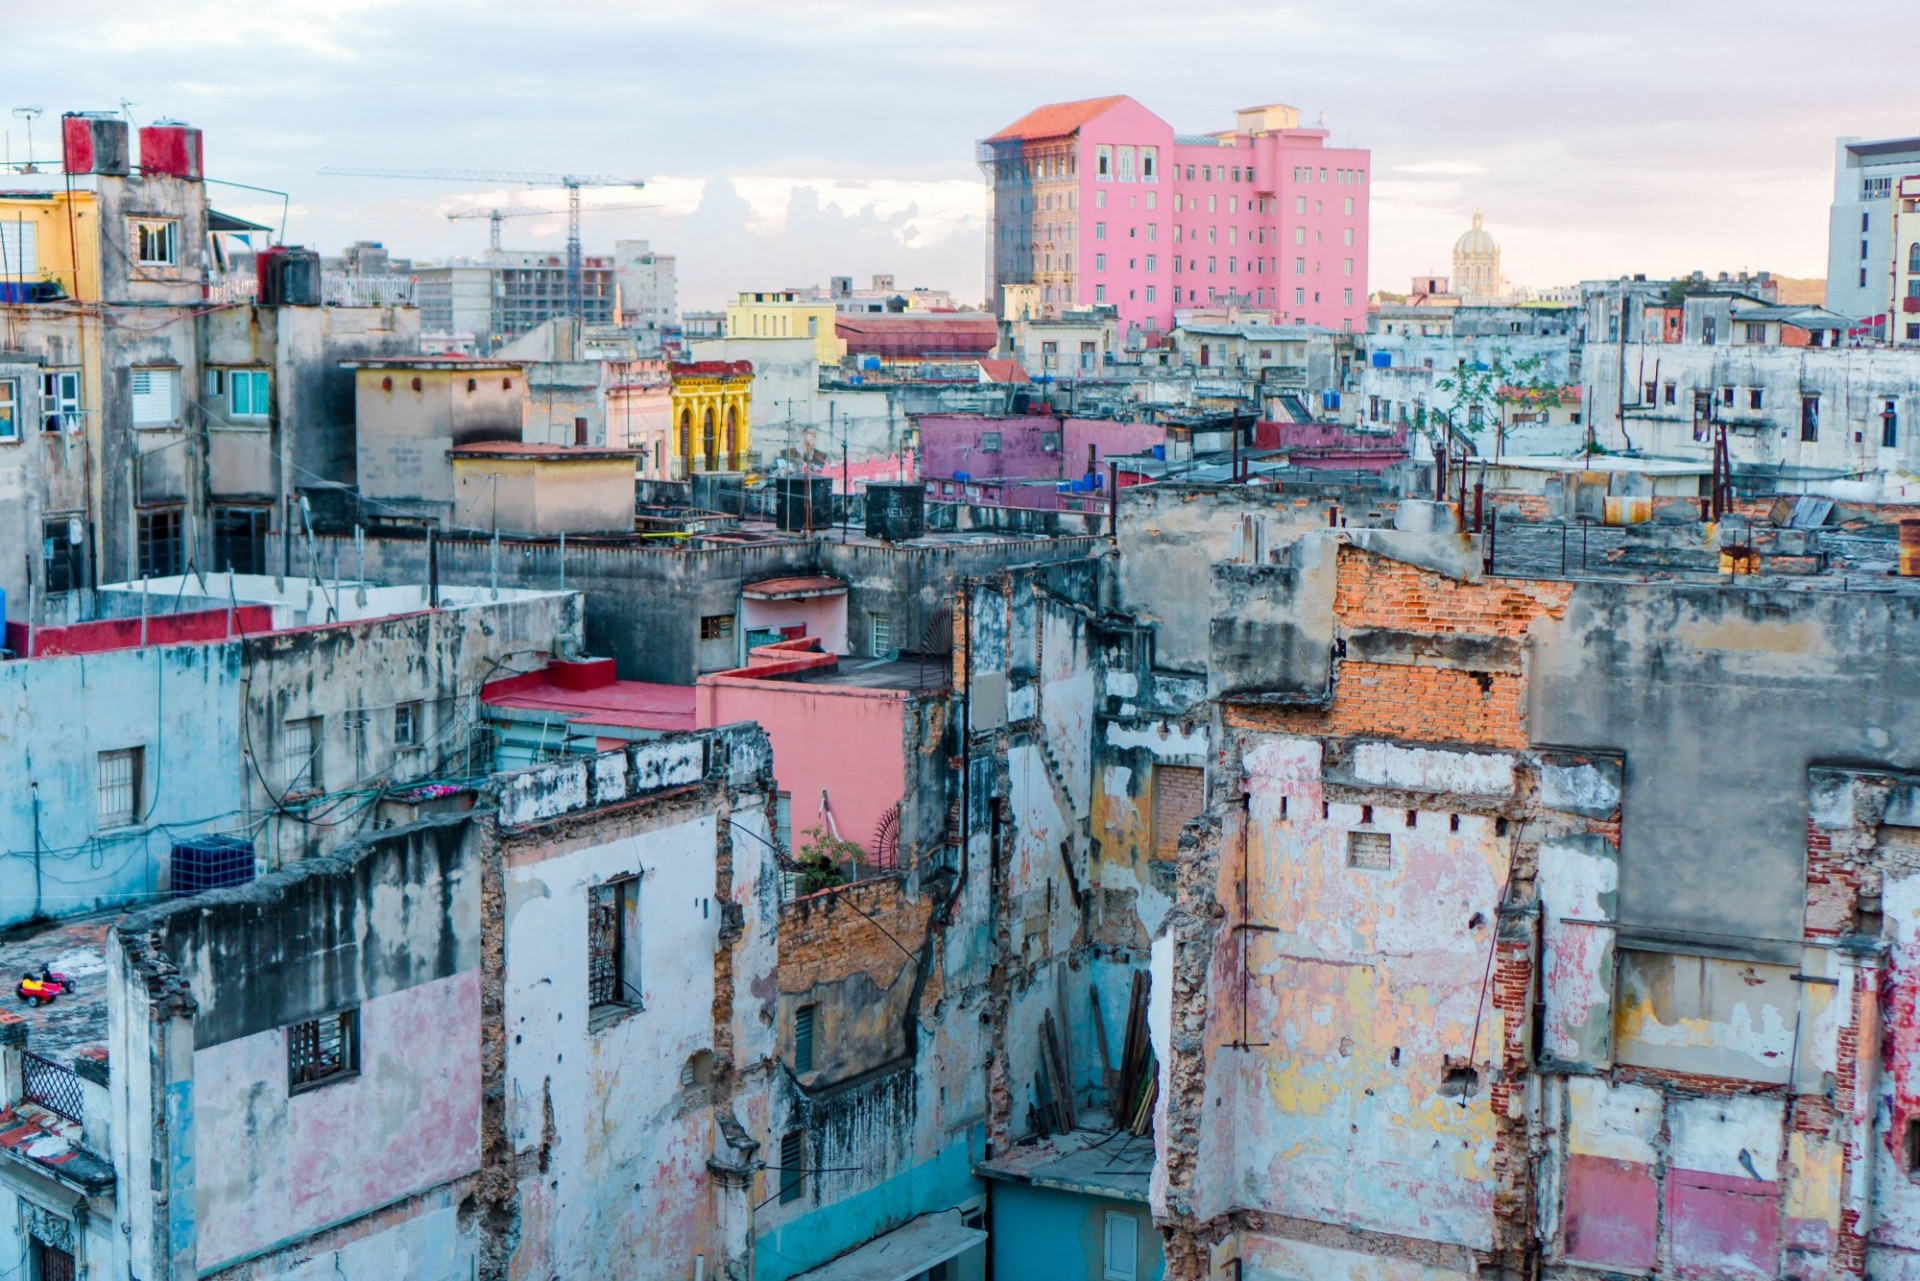 View of Havana's colorful crumbling buildings 